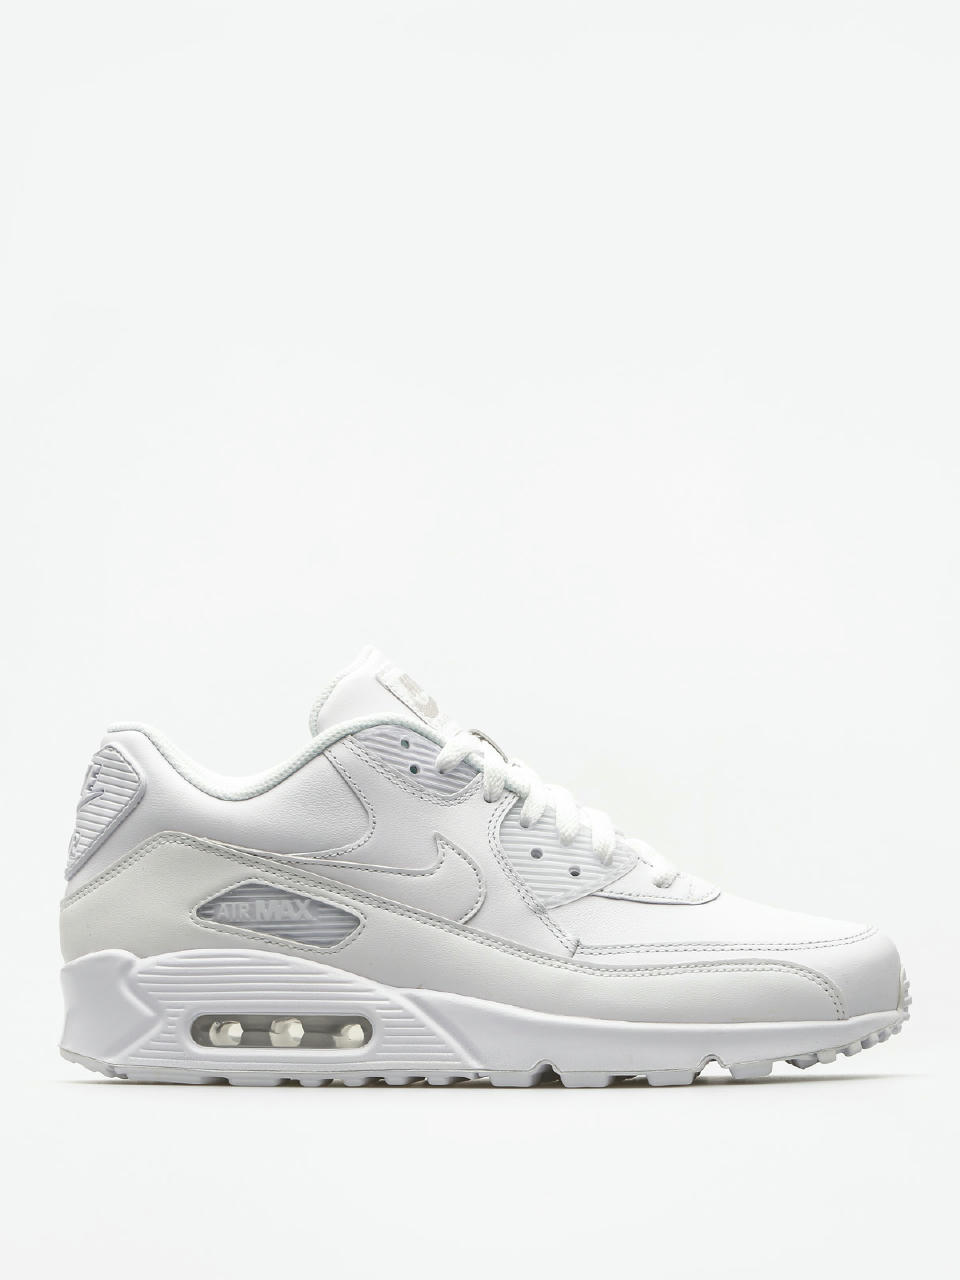 Nike Air Max 90 (Leather white/white)